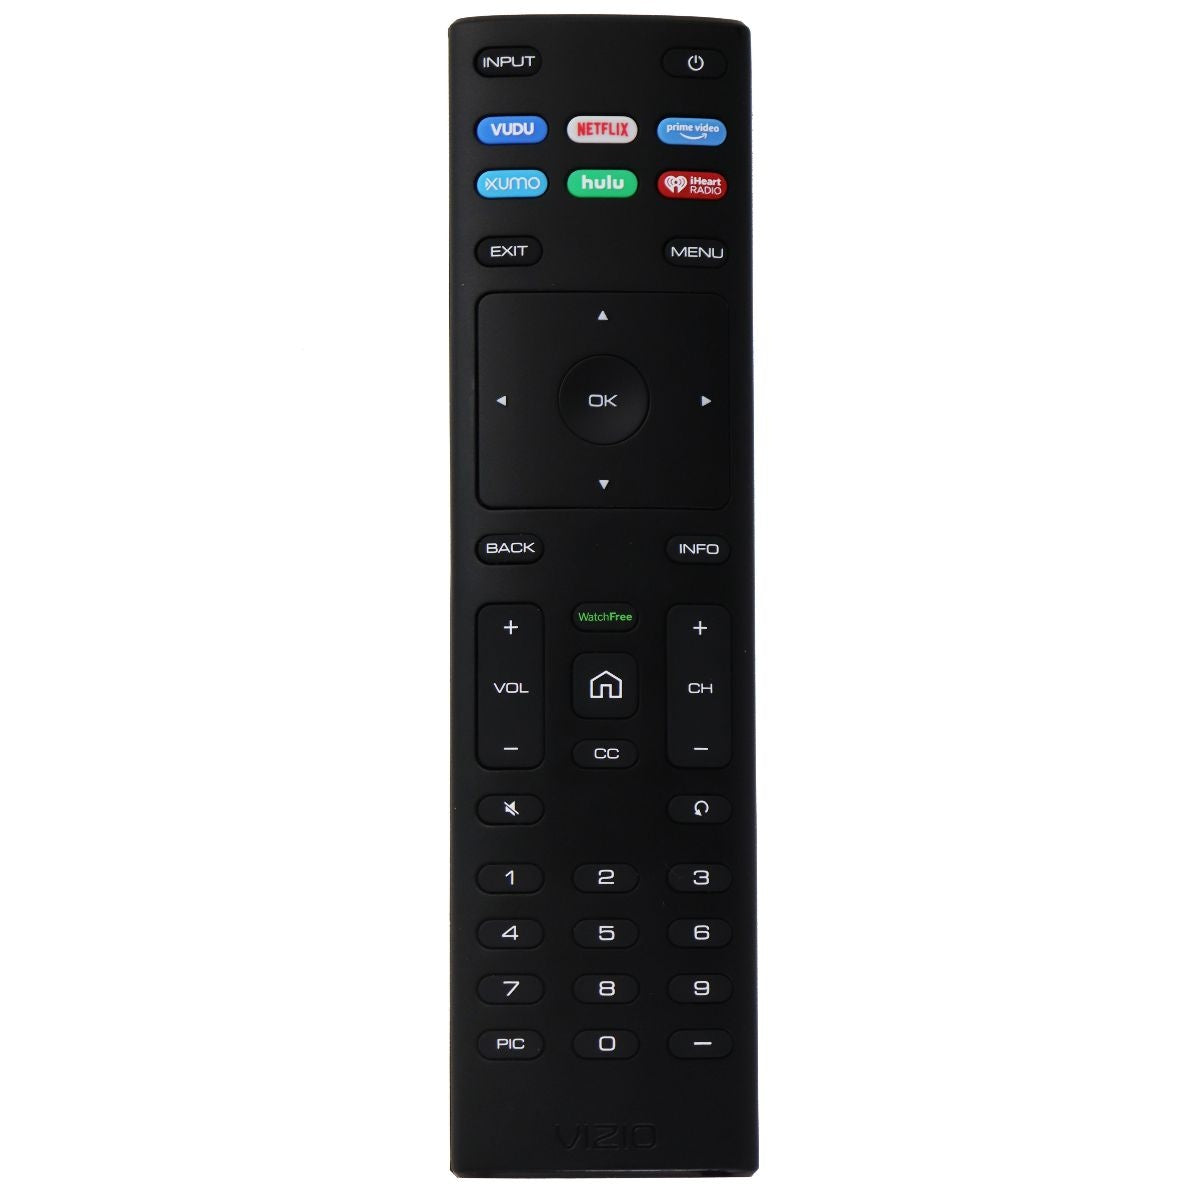 Vizio Remote Control (XRT136) with Vudu/Netflix/Prime Video Hotkeys - Black TV, Video & Audio Accessories - Remote Controls Vizio    - Simple Cell Bulk Wholesale Pricing - USA Seller